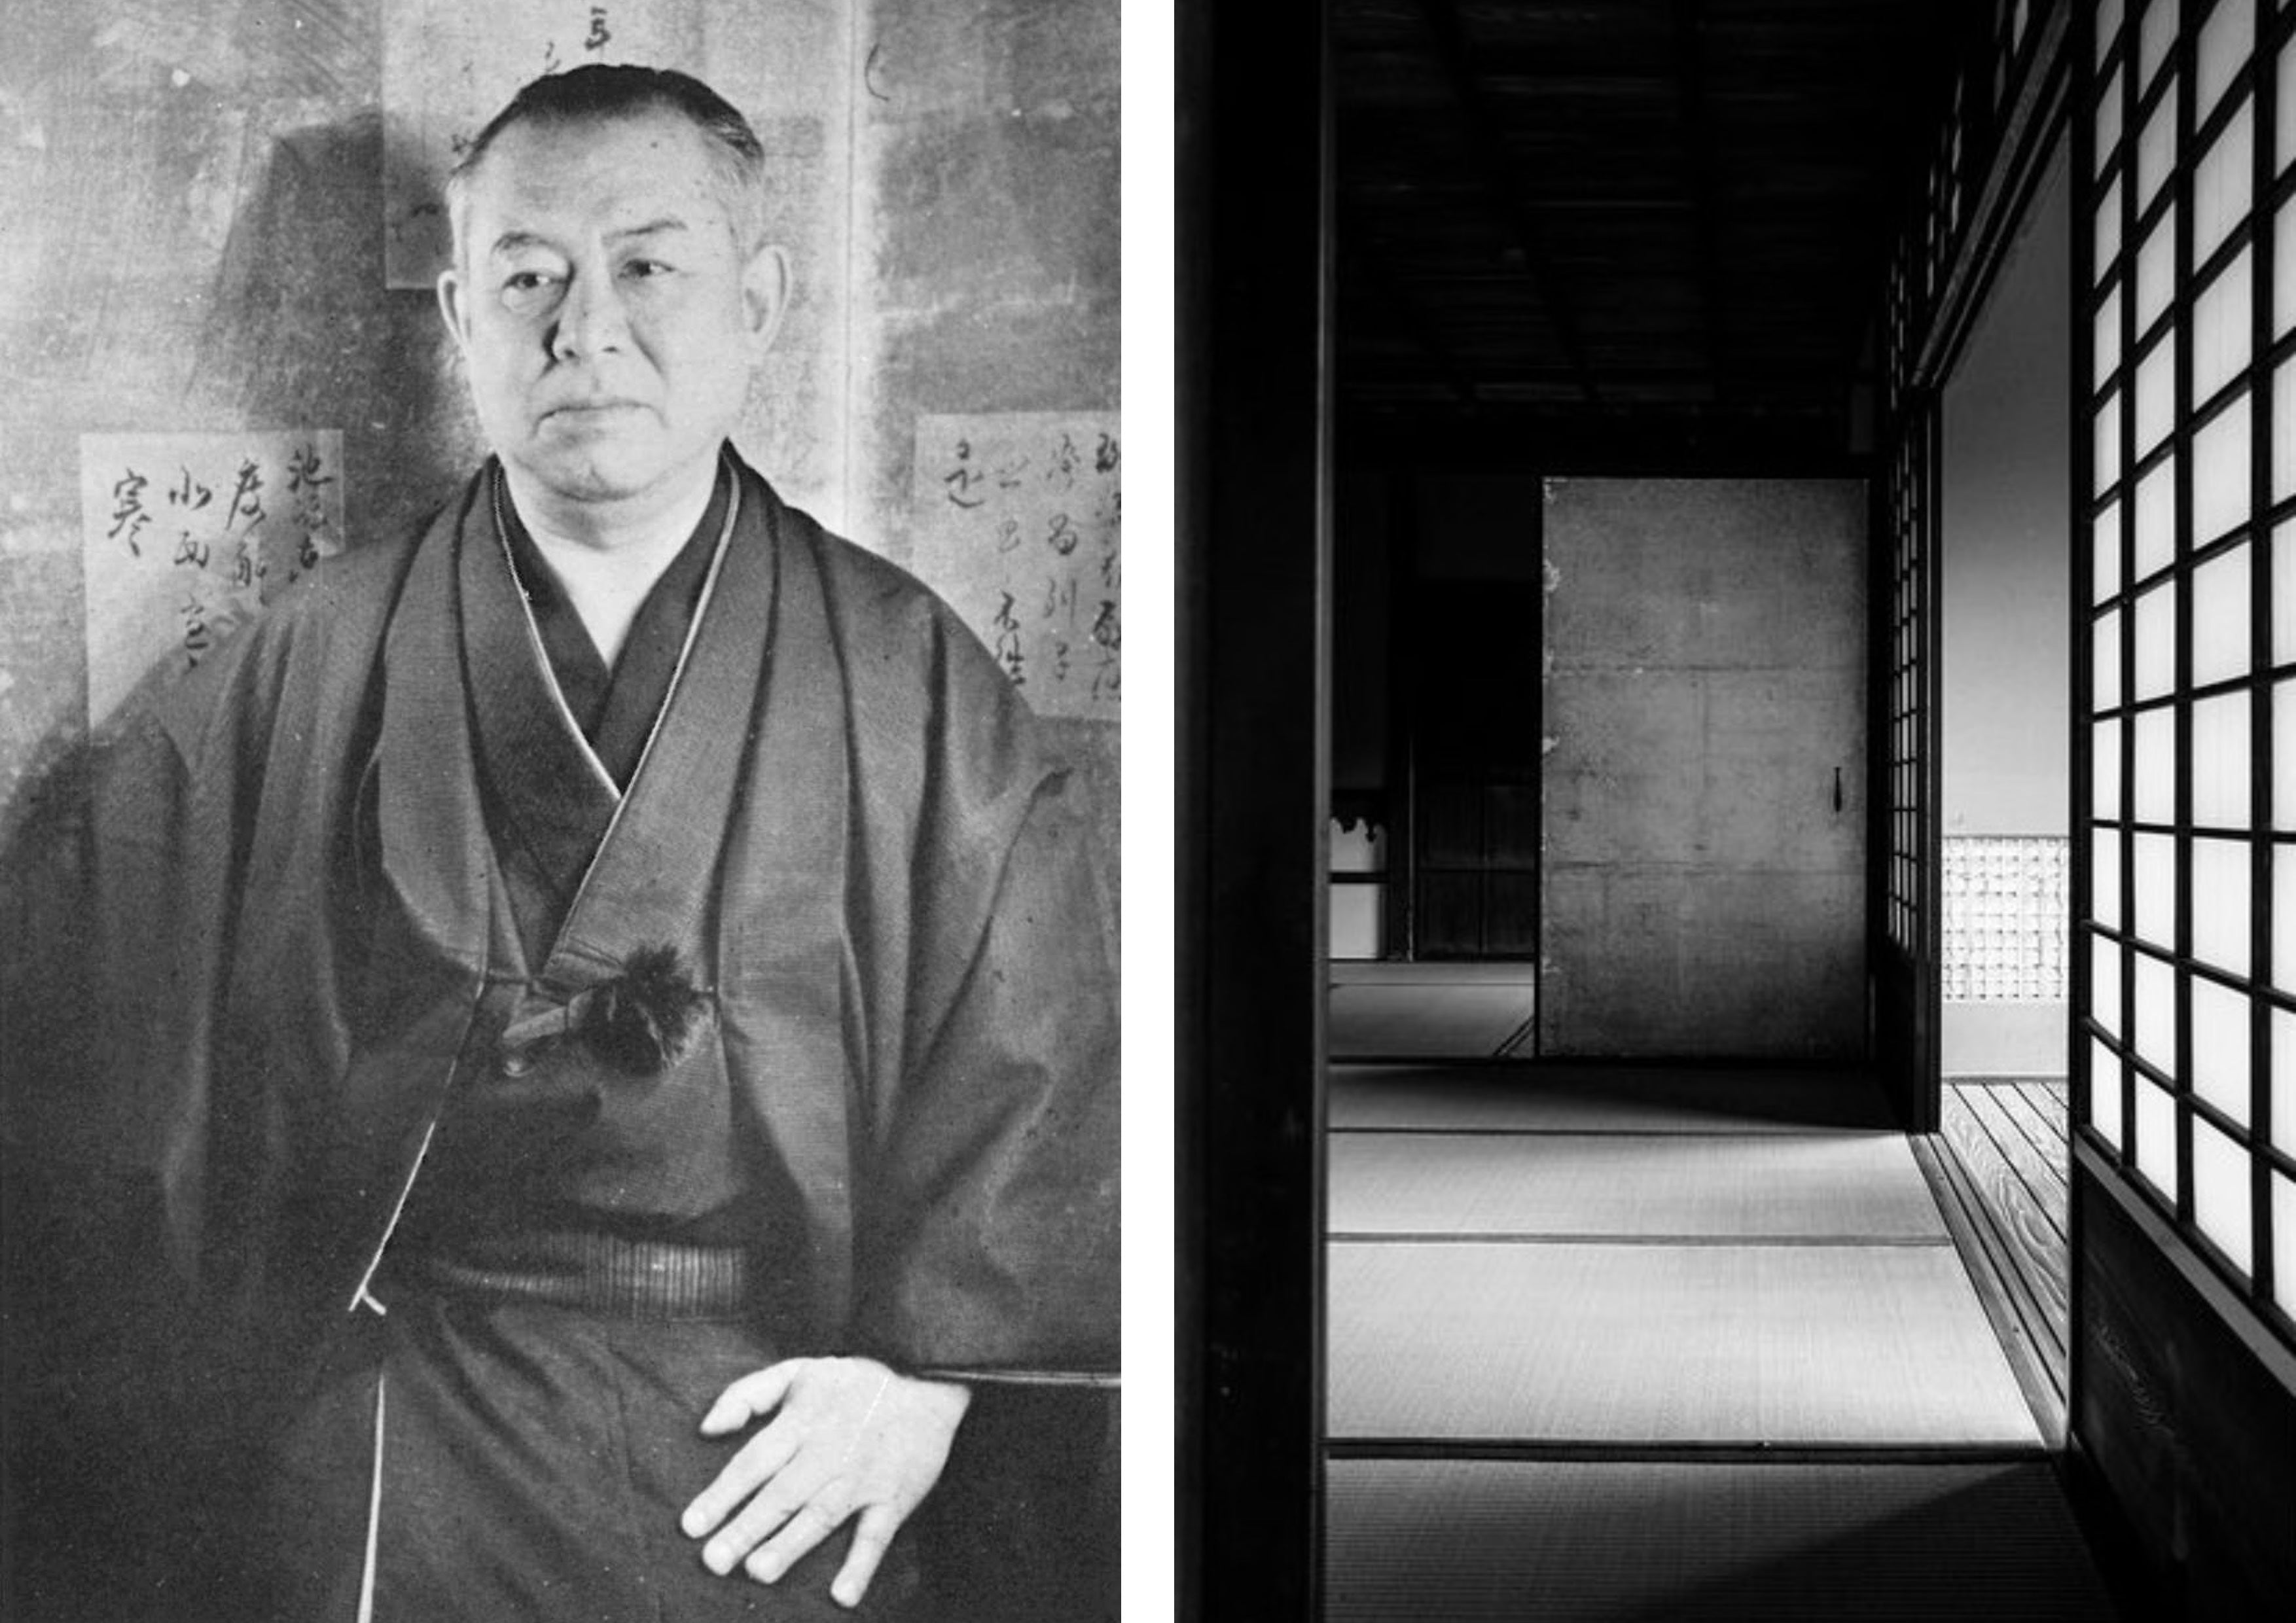  Left: Junichiro Tanizaki. Right: Traditional Japanese Interior, naturally lit.